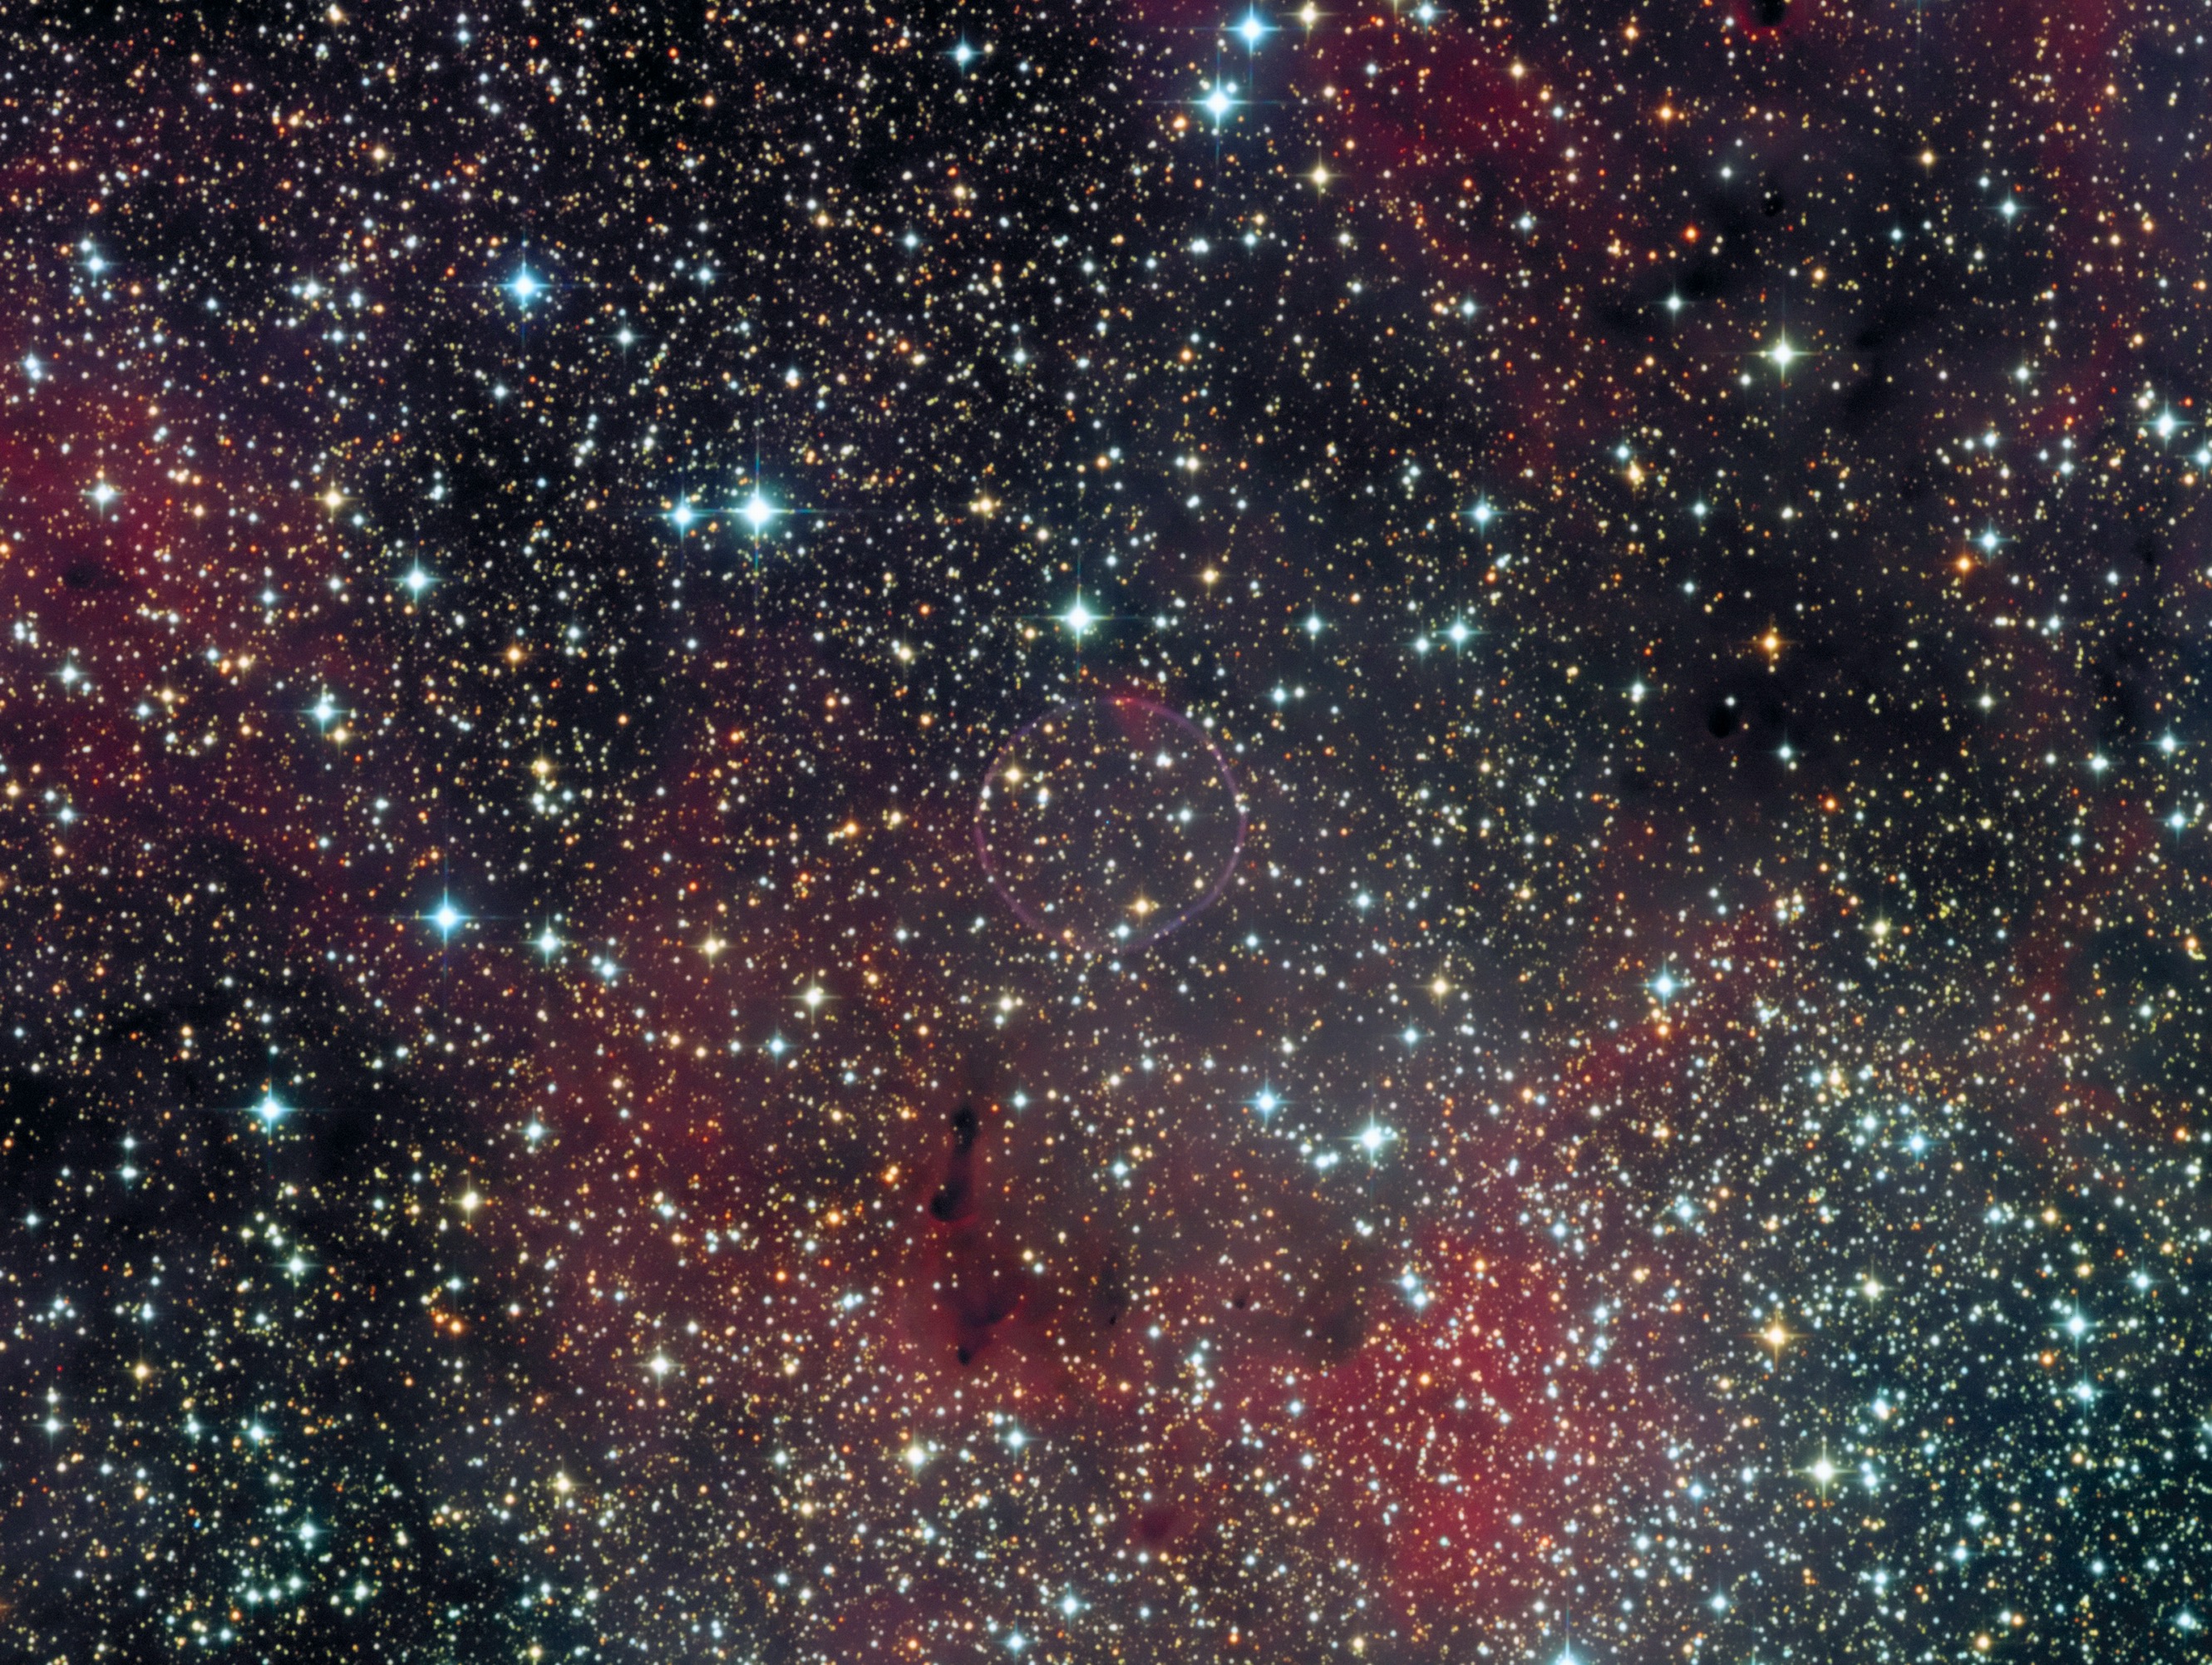 Soap Bubble Nebula.jpg